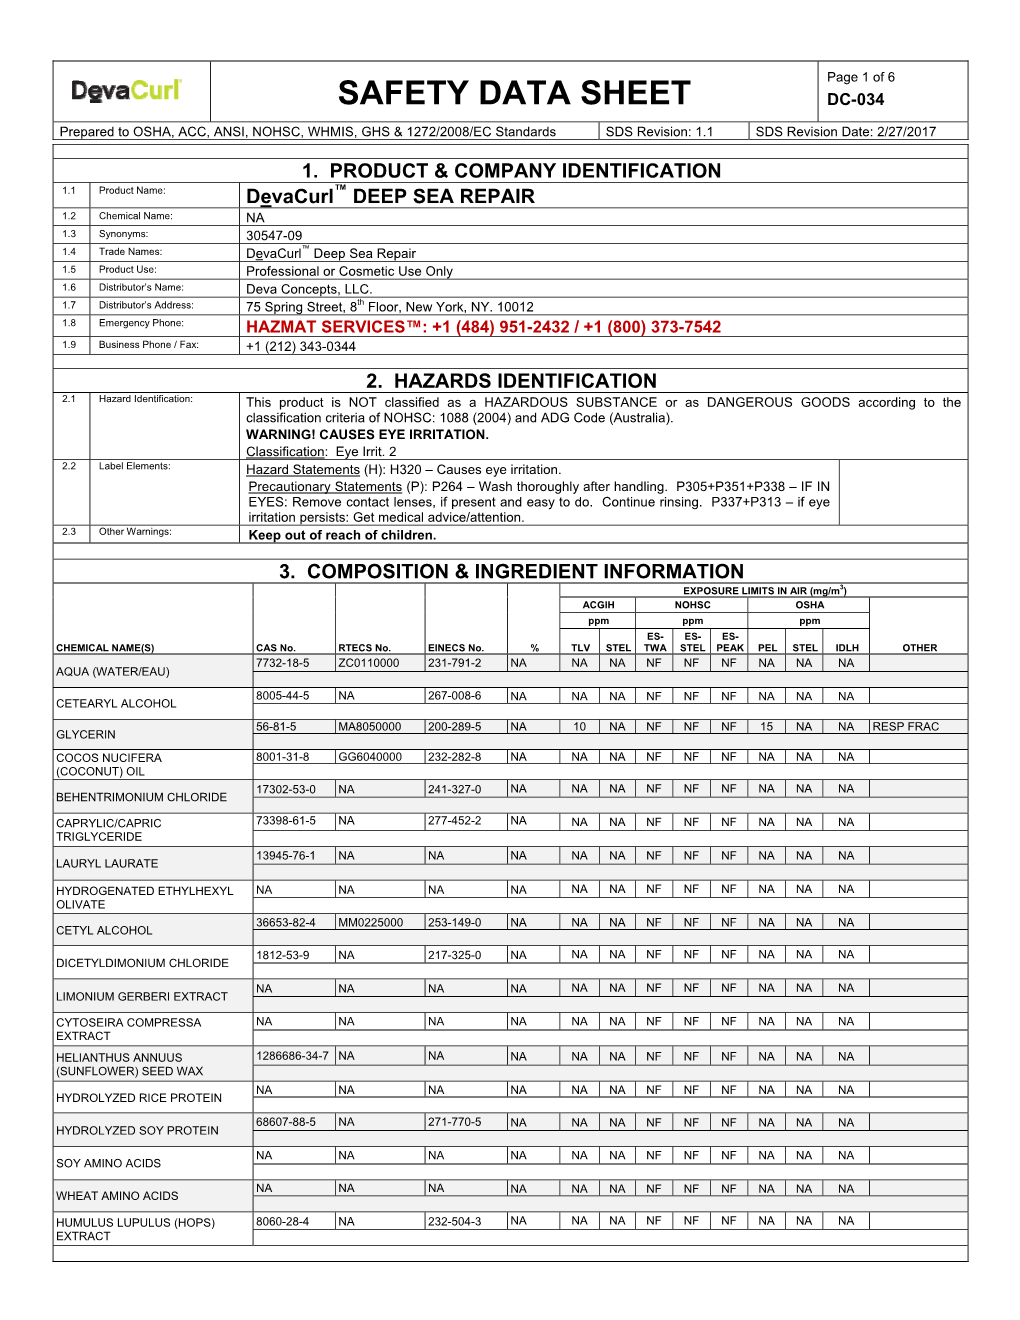 Safety Data Sheet Dc-034